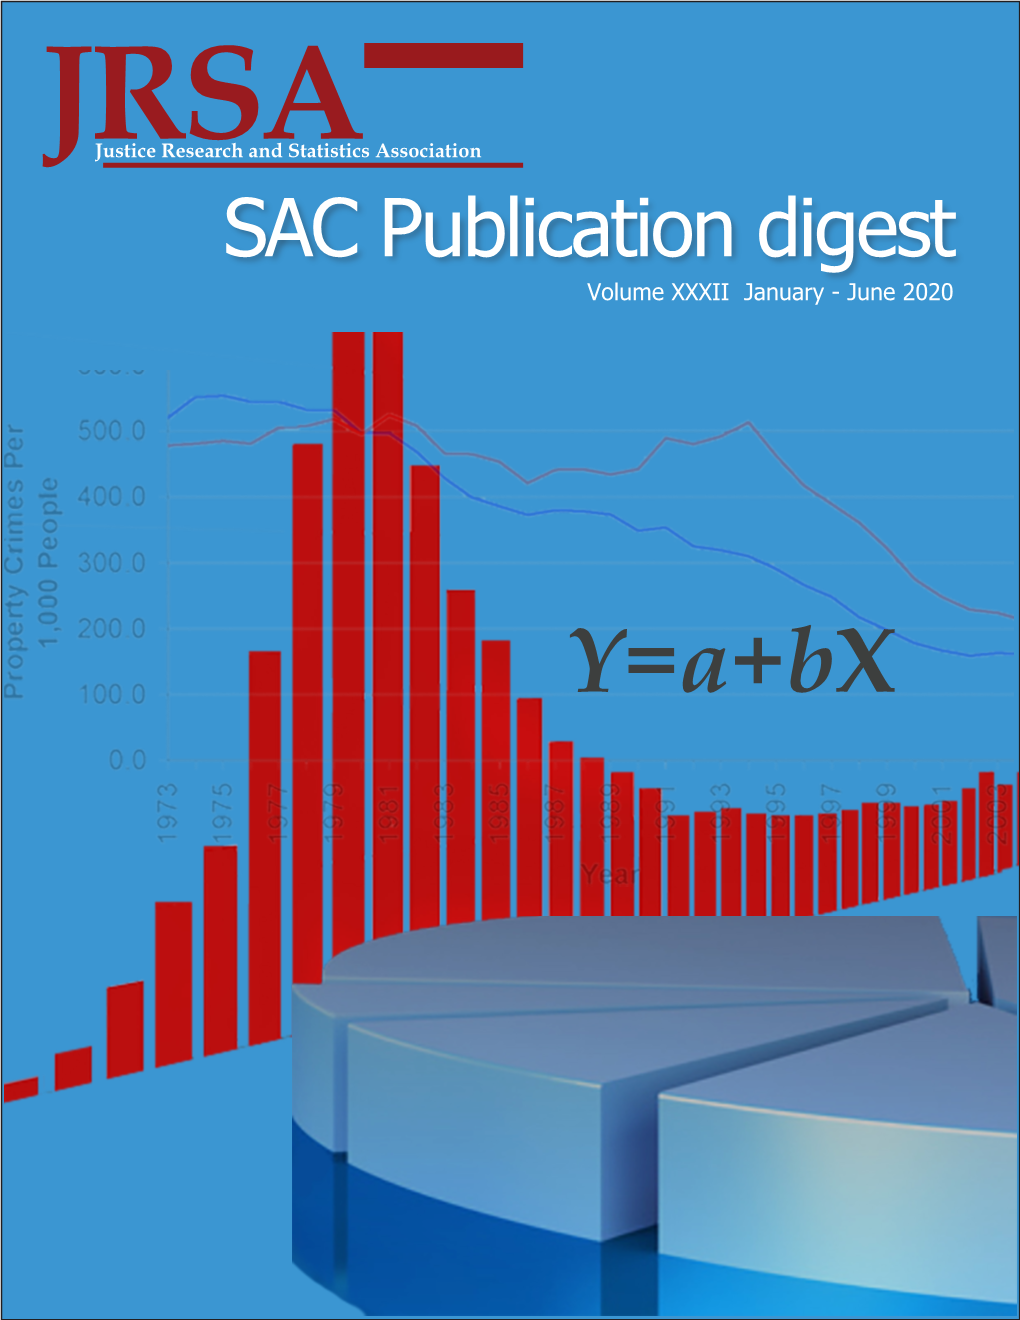 SAC Publication Digest Volume XXXII January - June 2020